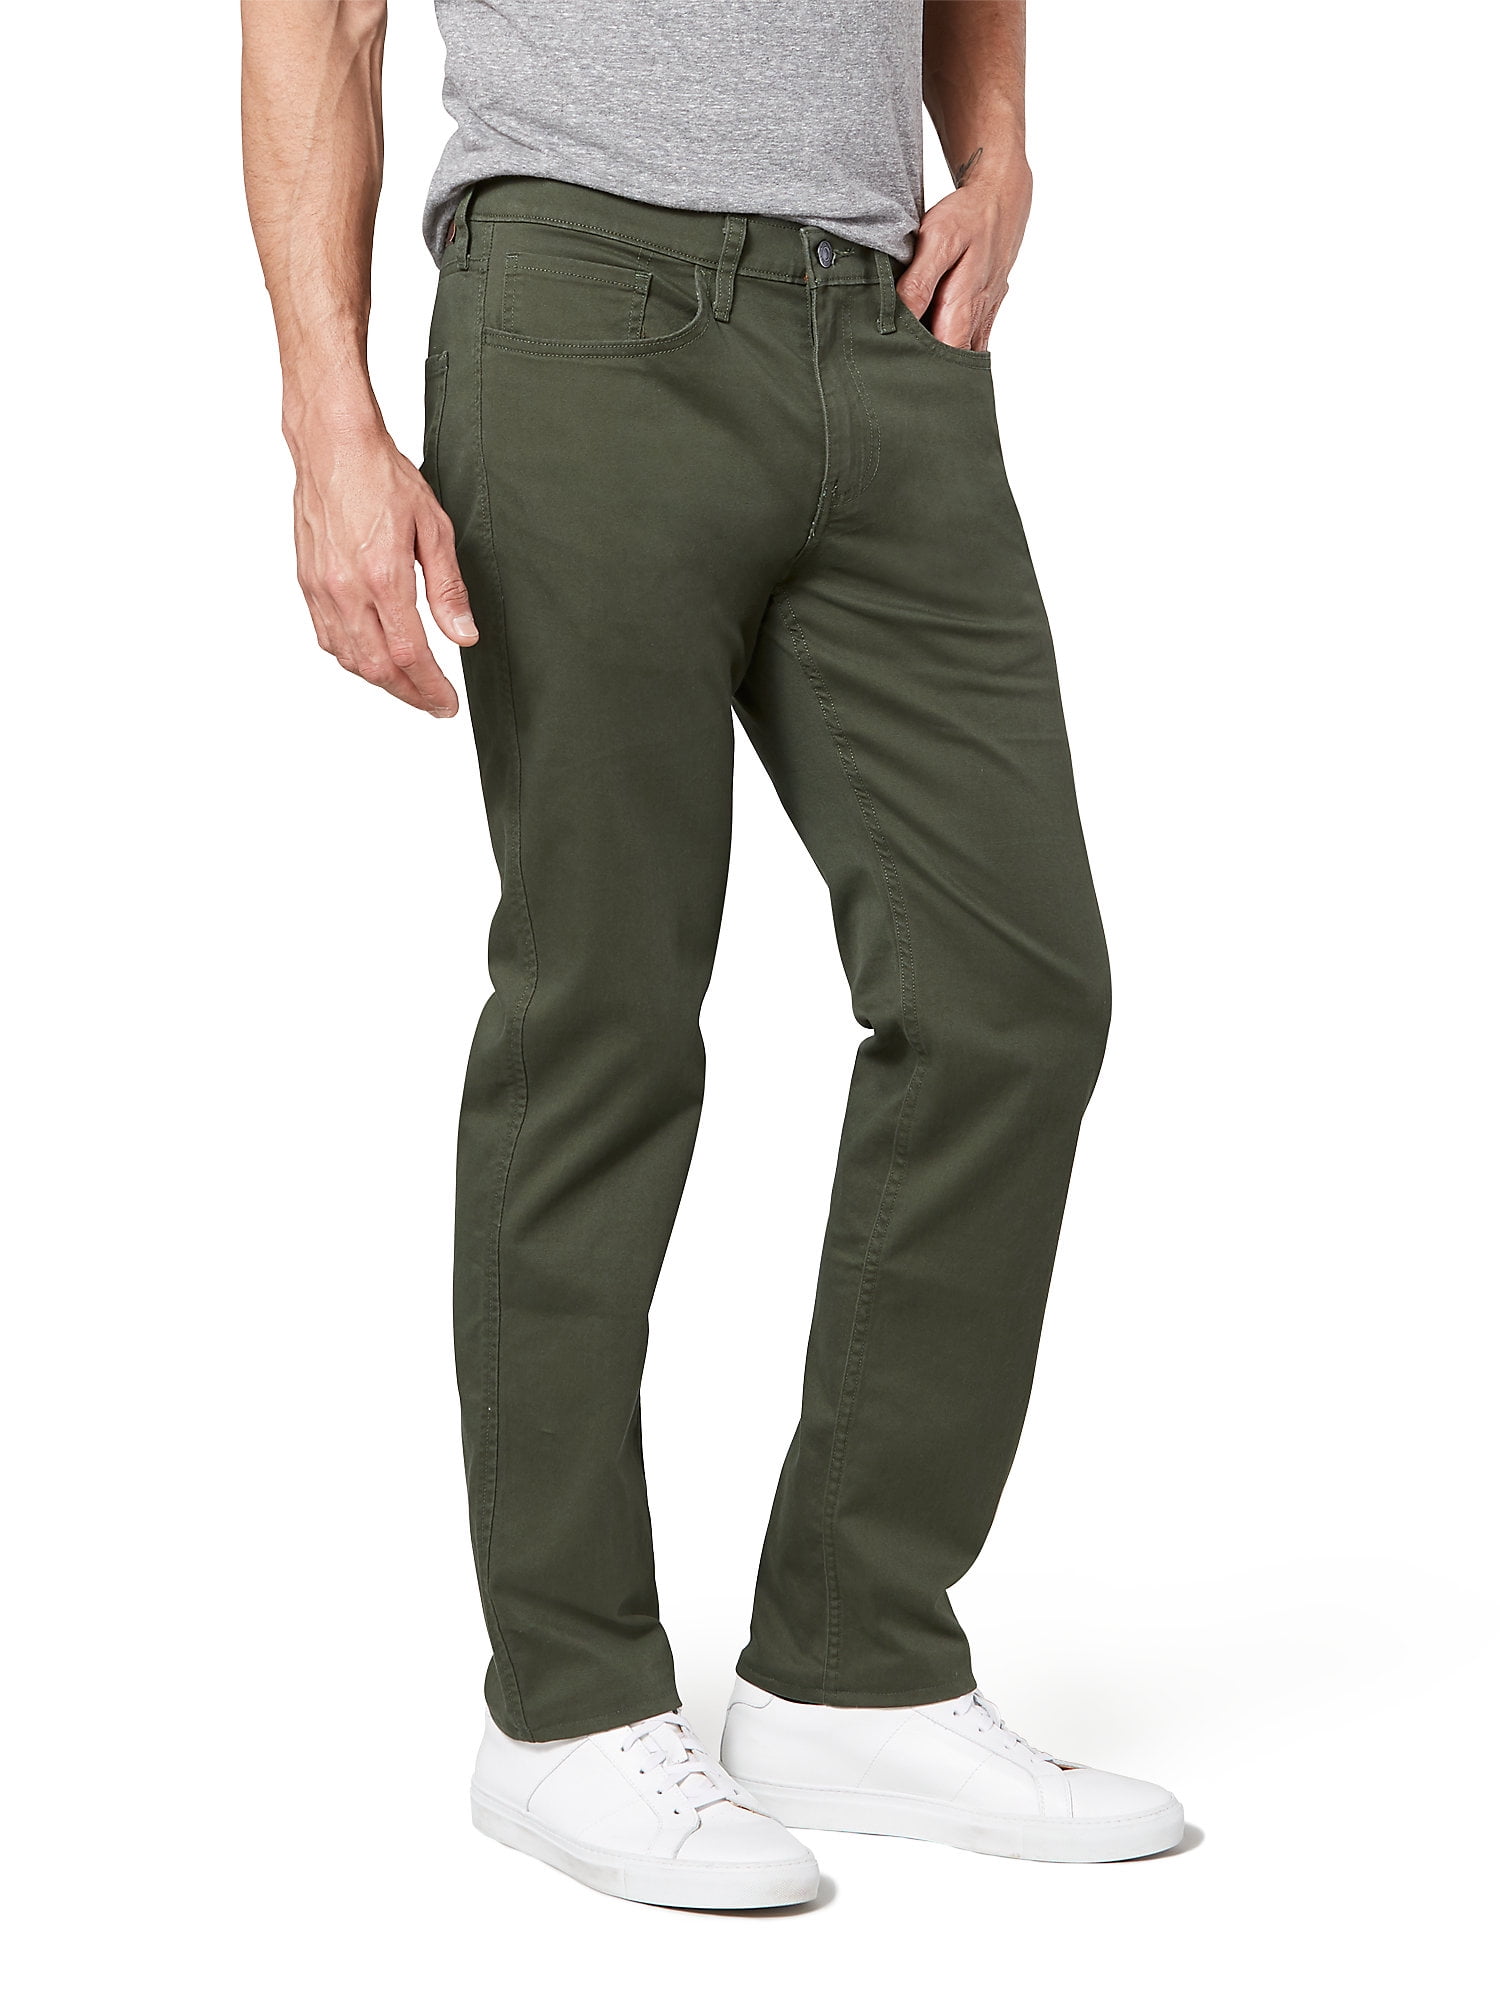 Dockers Jean Cut Pants Straight Fit All Season Tech Stretch Comfort Waist Green 